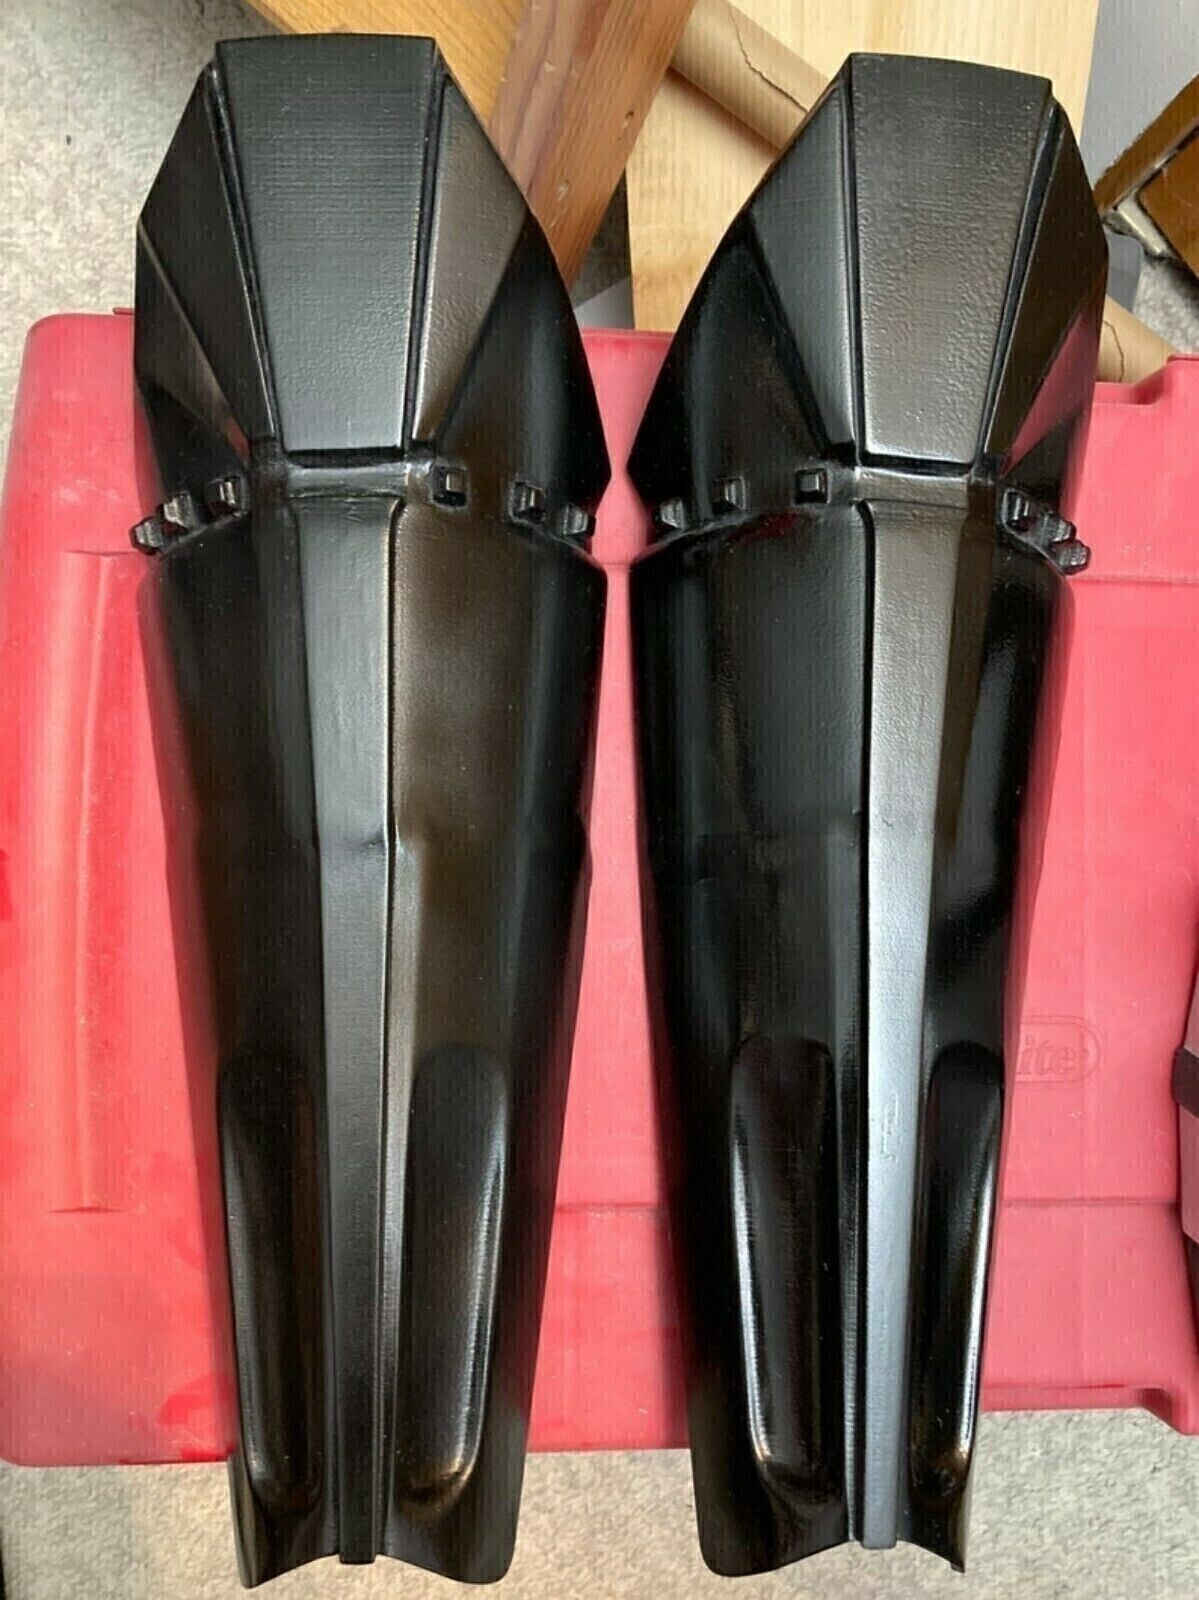 Medieval Darth Vader Star Wars Collectibles Darth Vader Shin Guards leg armor